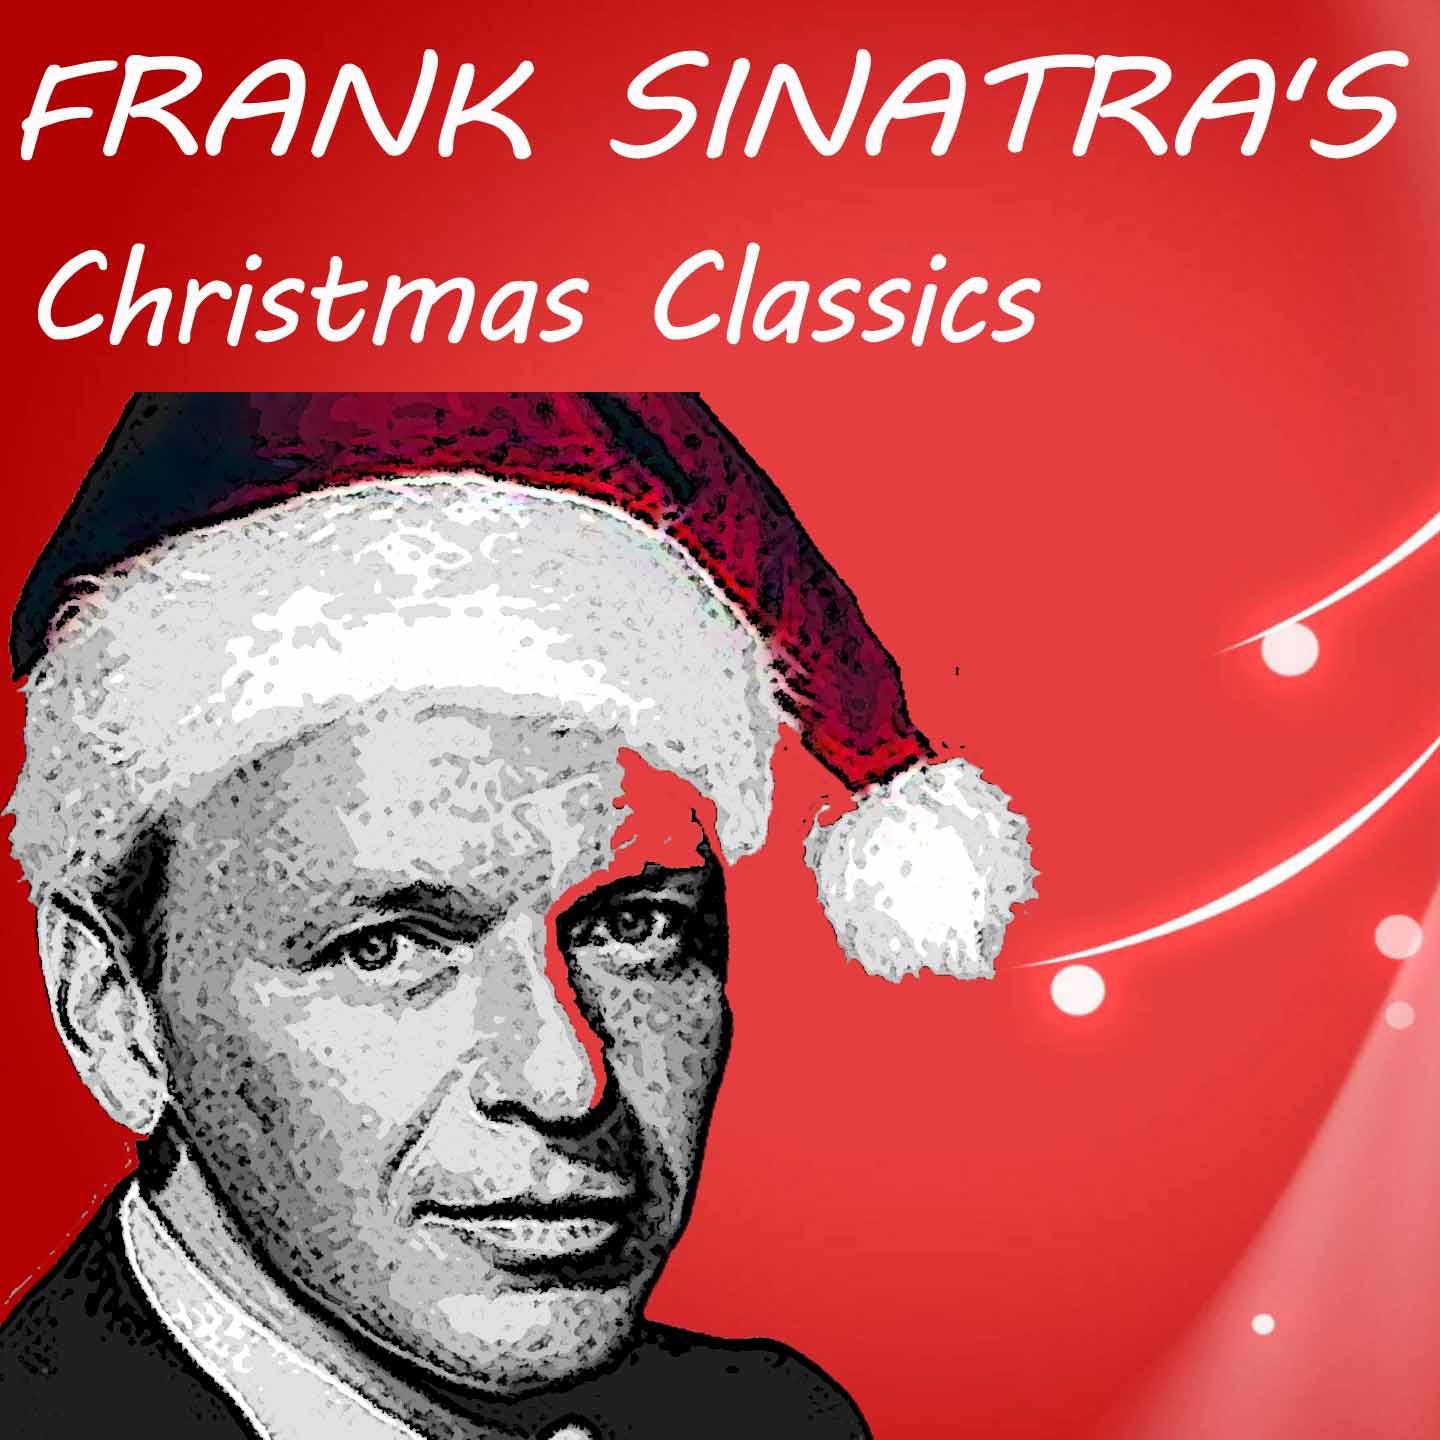 Frank Sinatra's Christmas Classics